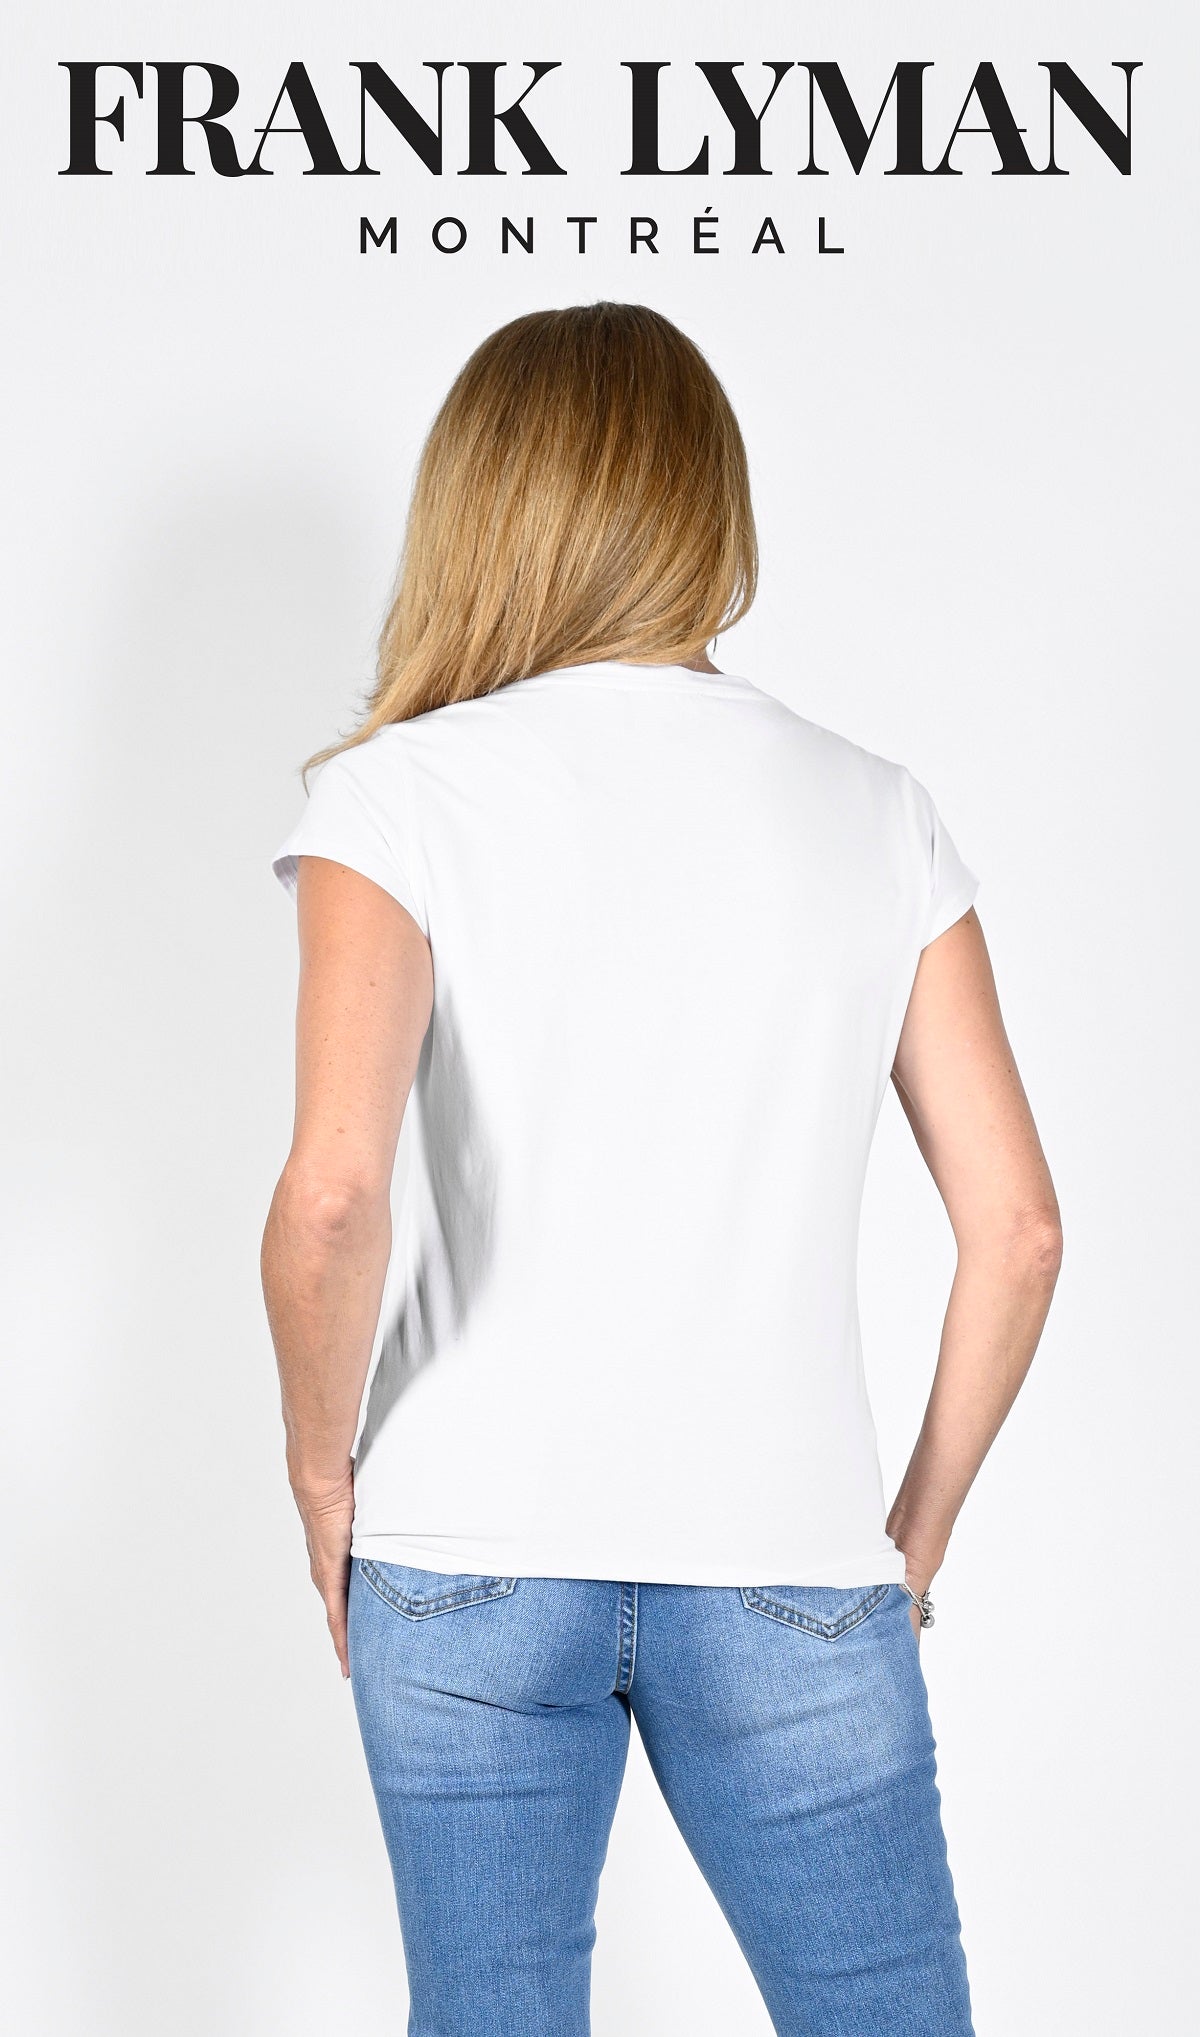 Frank Lyman Montreal T-shirts-Buy Frank Lyman Montreal T-shirts Online-Online T-shirt Shop